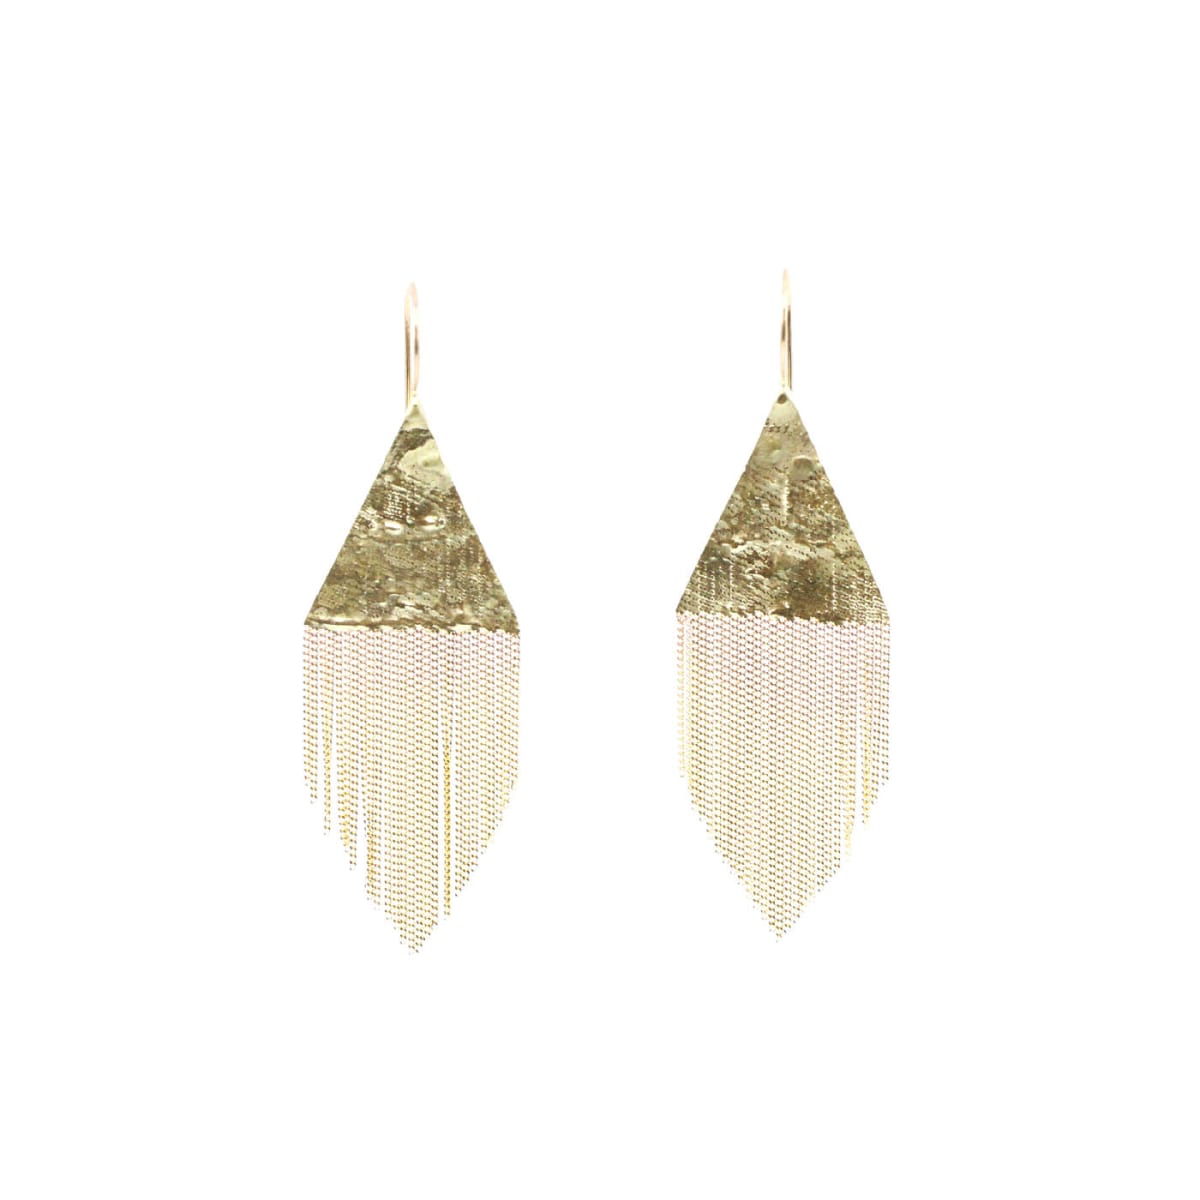 Gold Fish Earrings by Hannah Keefe  Image: Gold earrings